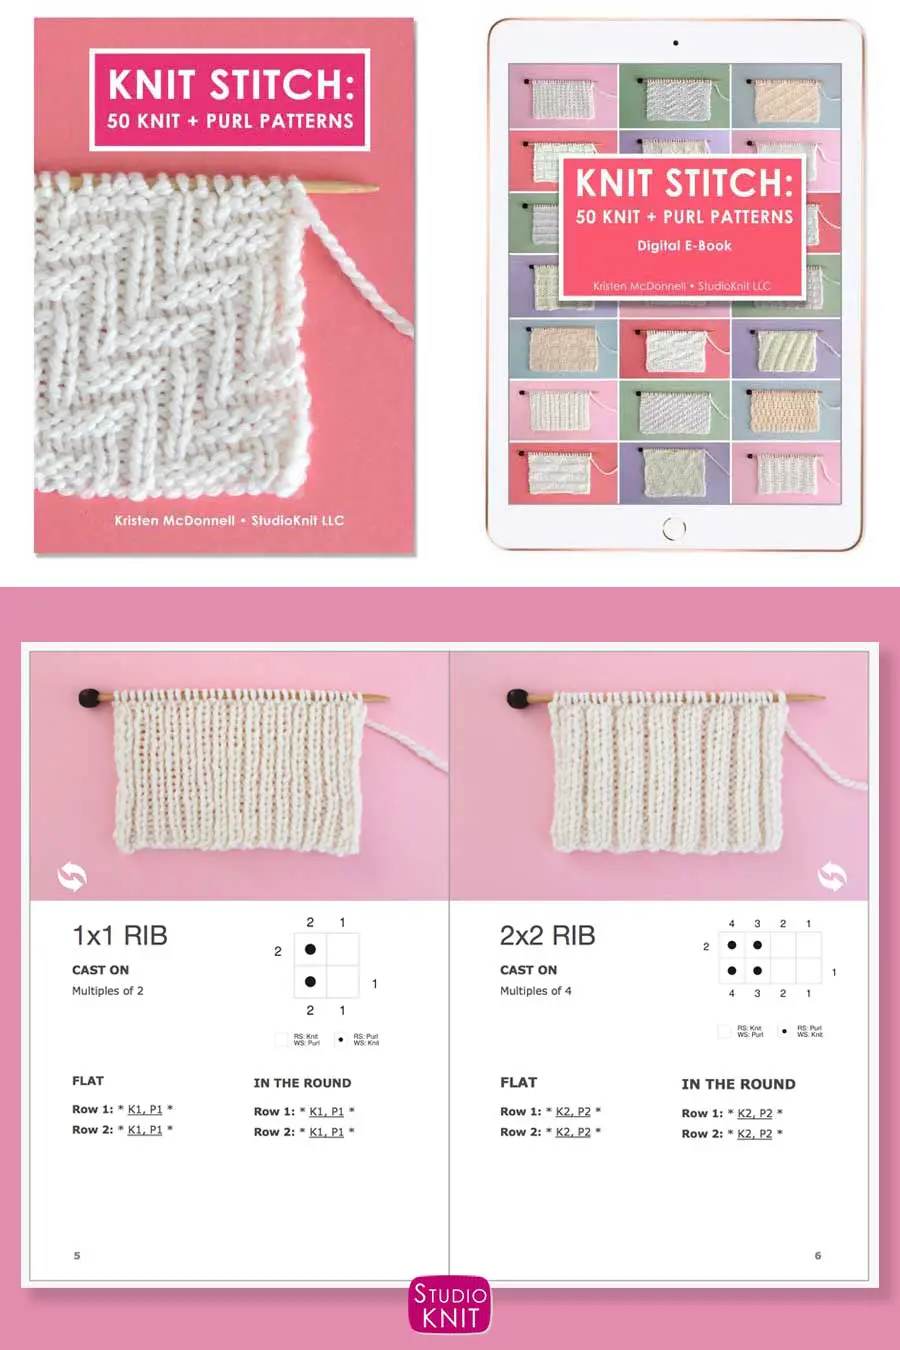 Knit Stitch Pattern Book with 2X2 Stitch Pattern by Studio Knit